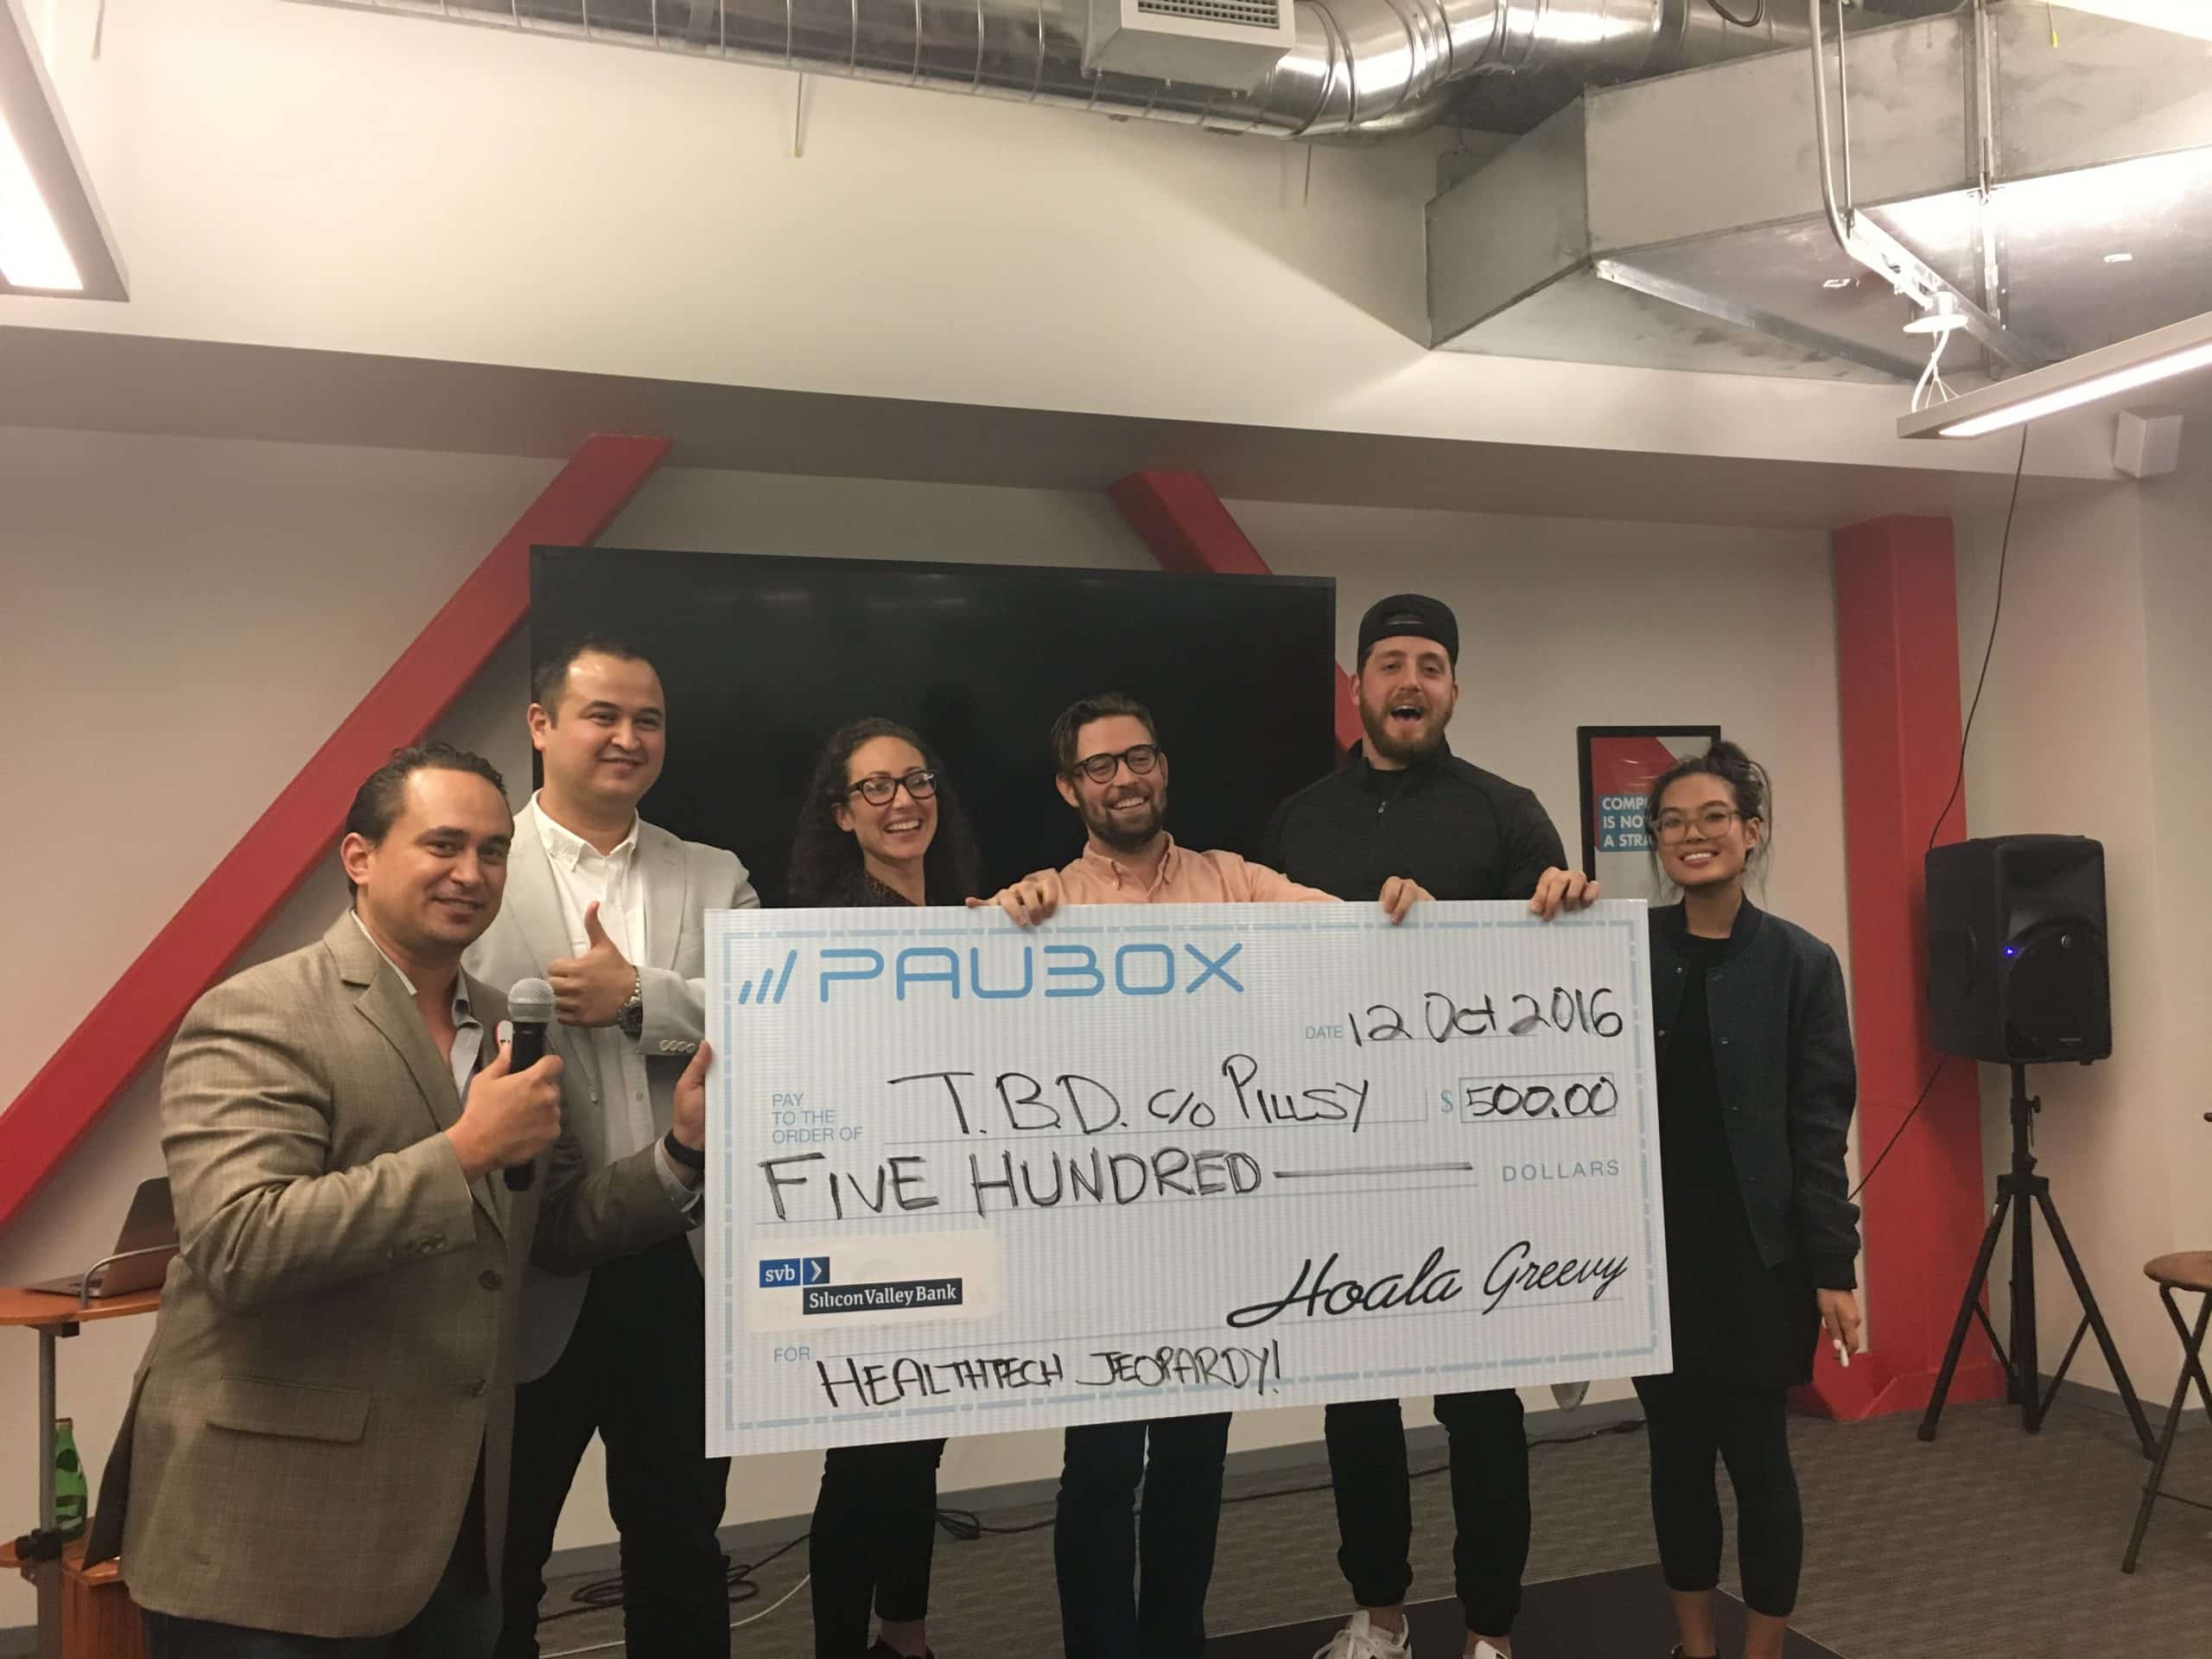 Pillsy wins HealthTech Jeopardy at 500 Startups - Paubox